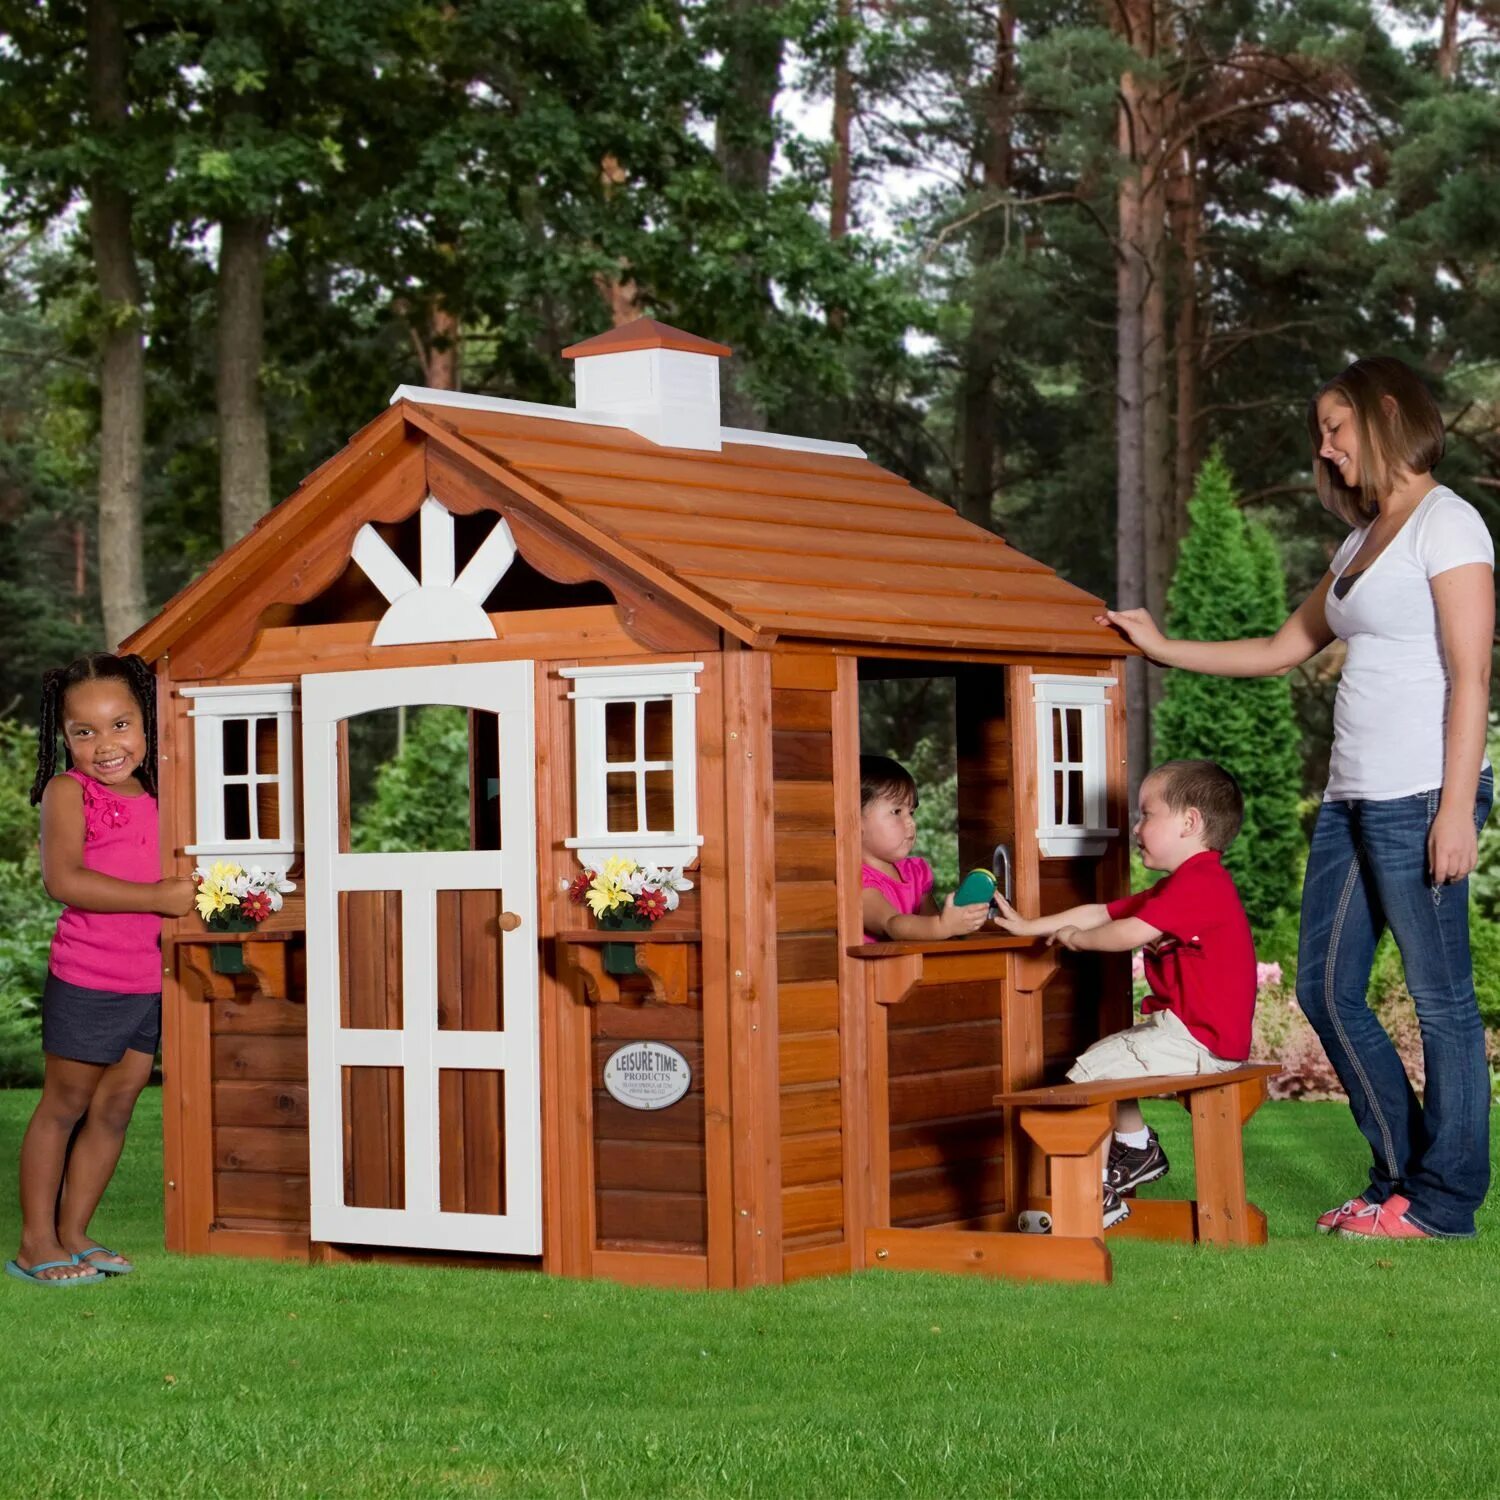 Alfred play house. Домик для детей. Детский домик для дачи. Детские деревянные домики. Игровой домик для детей на дачу.